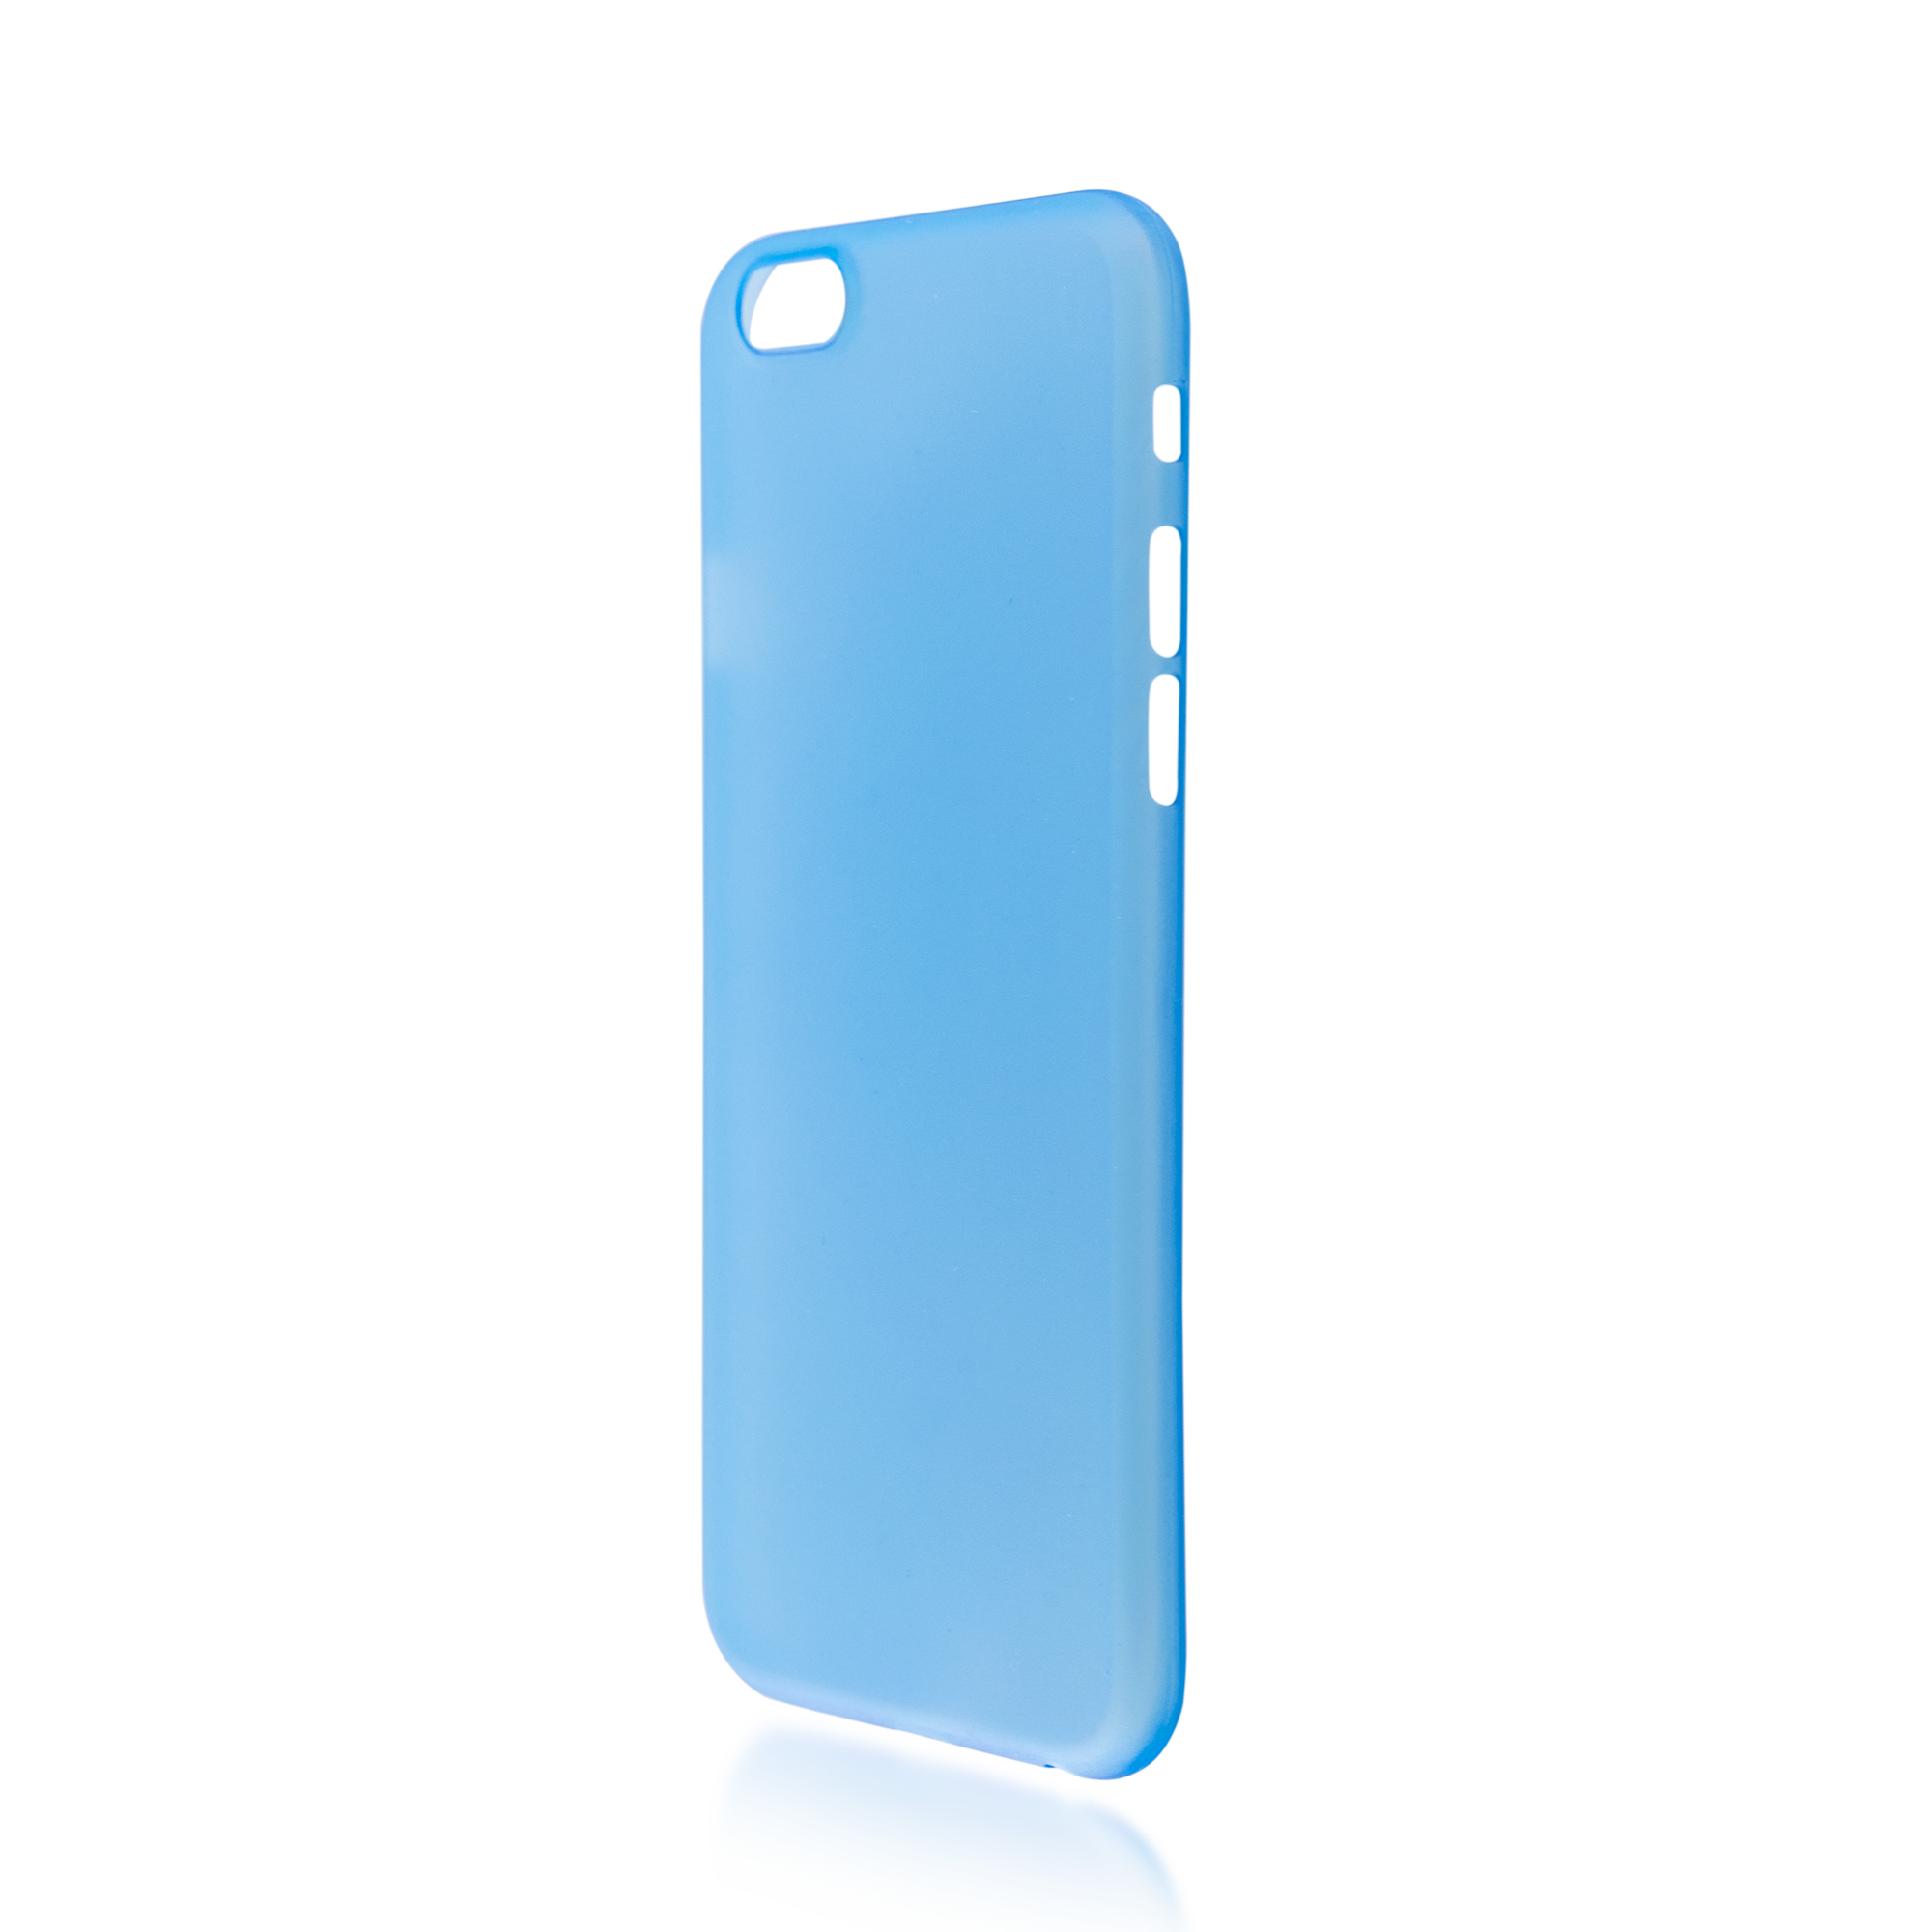 Чехол-накладка BROSCO SuperSlim для смартфона Apple iPhone 6, пластик, синий (IP6-PP-SUPERSLIM-BLUE)